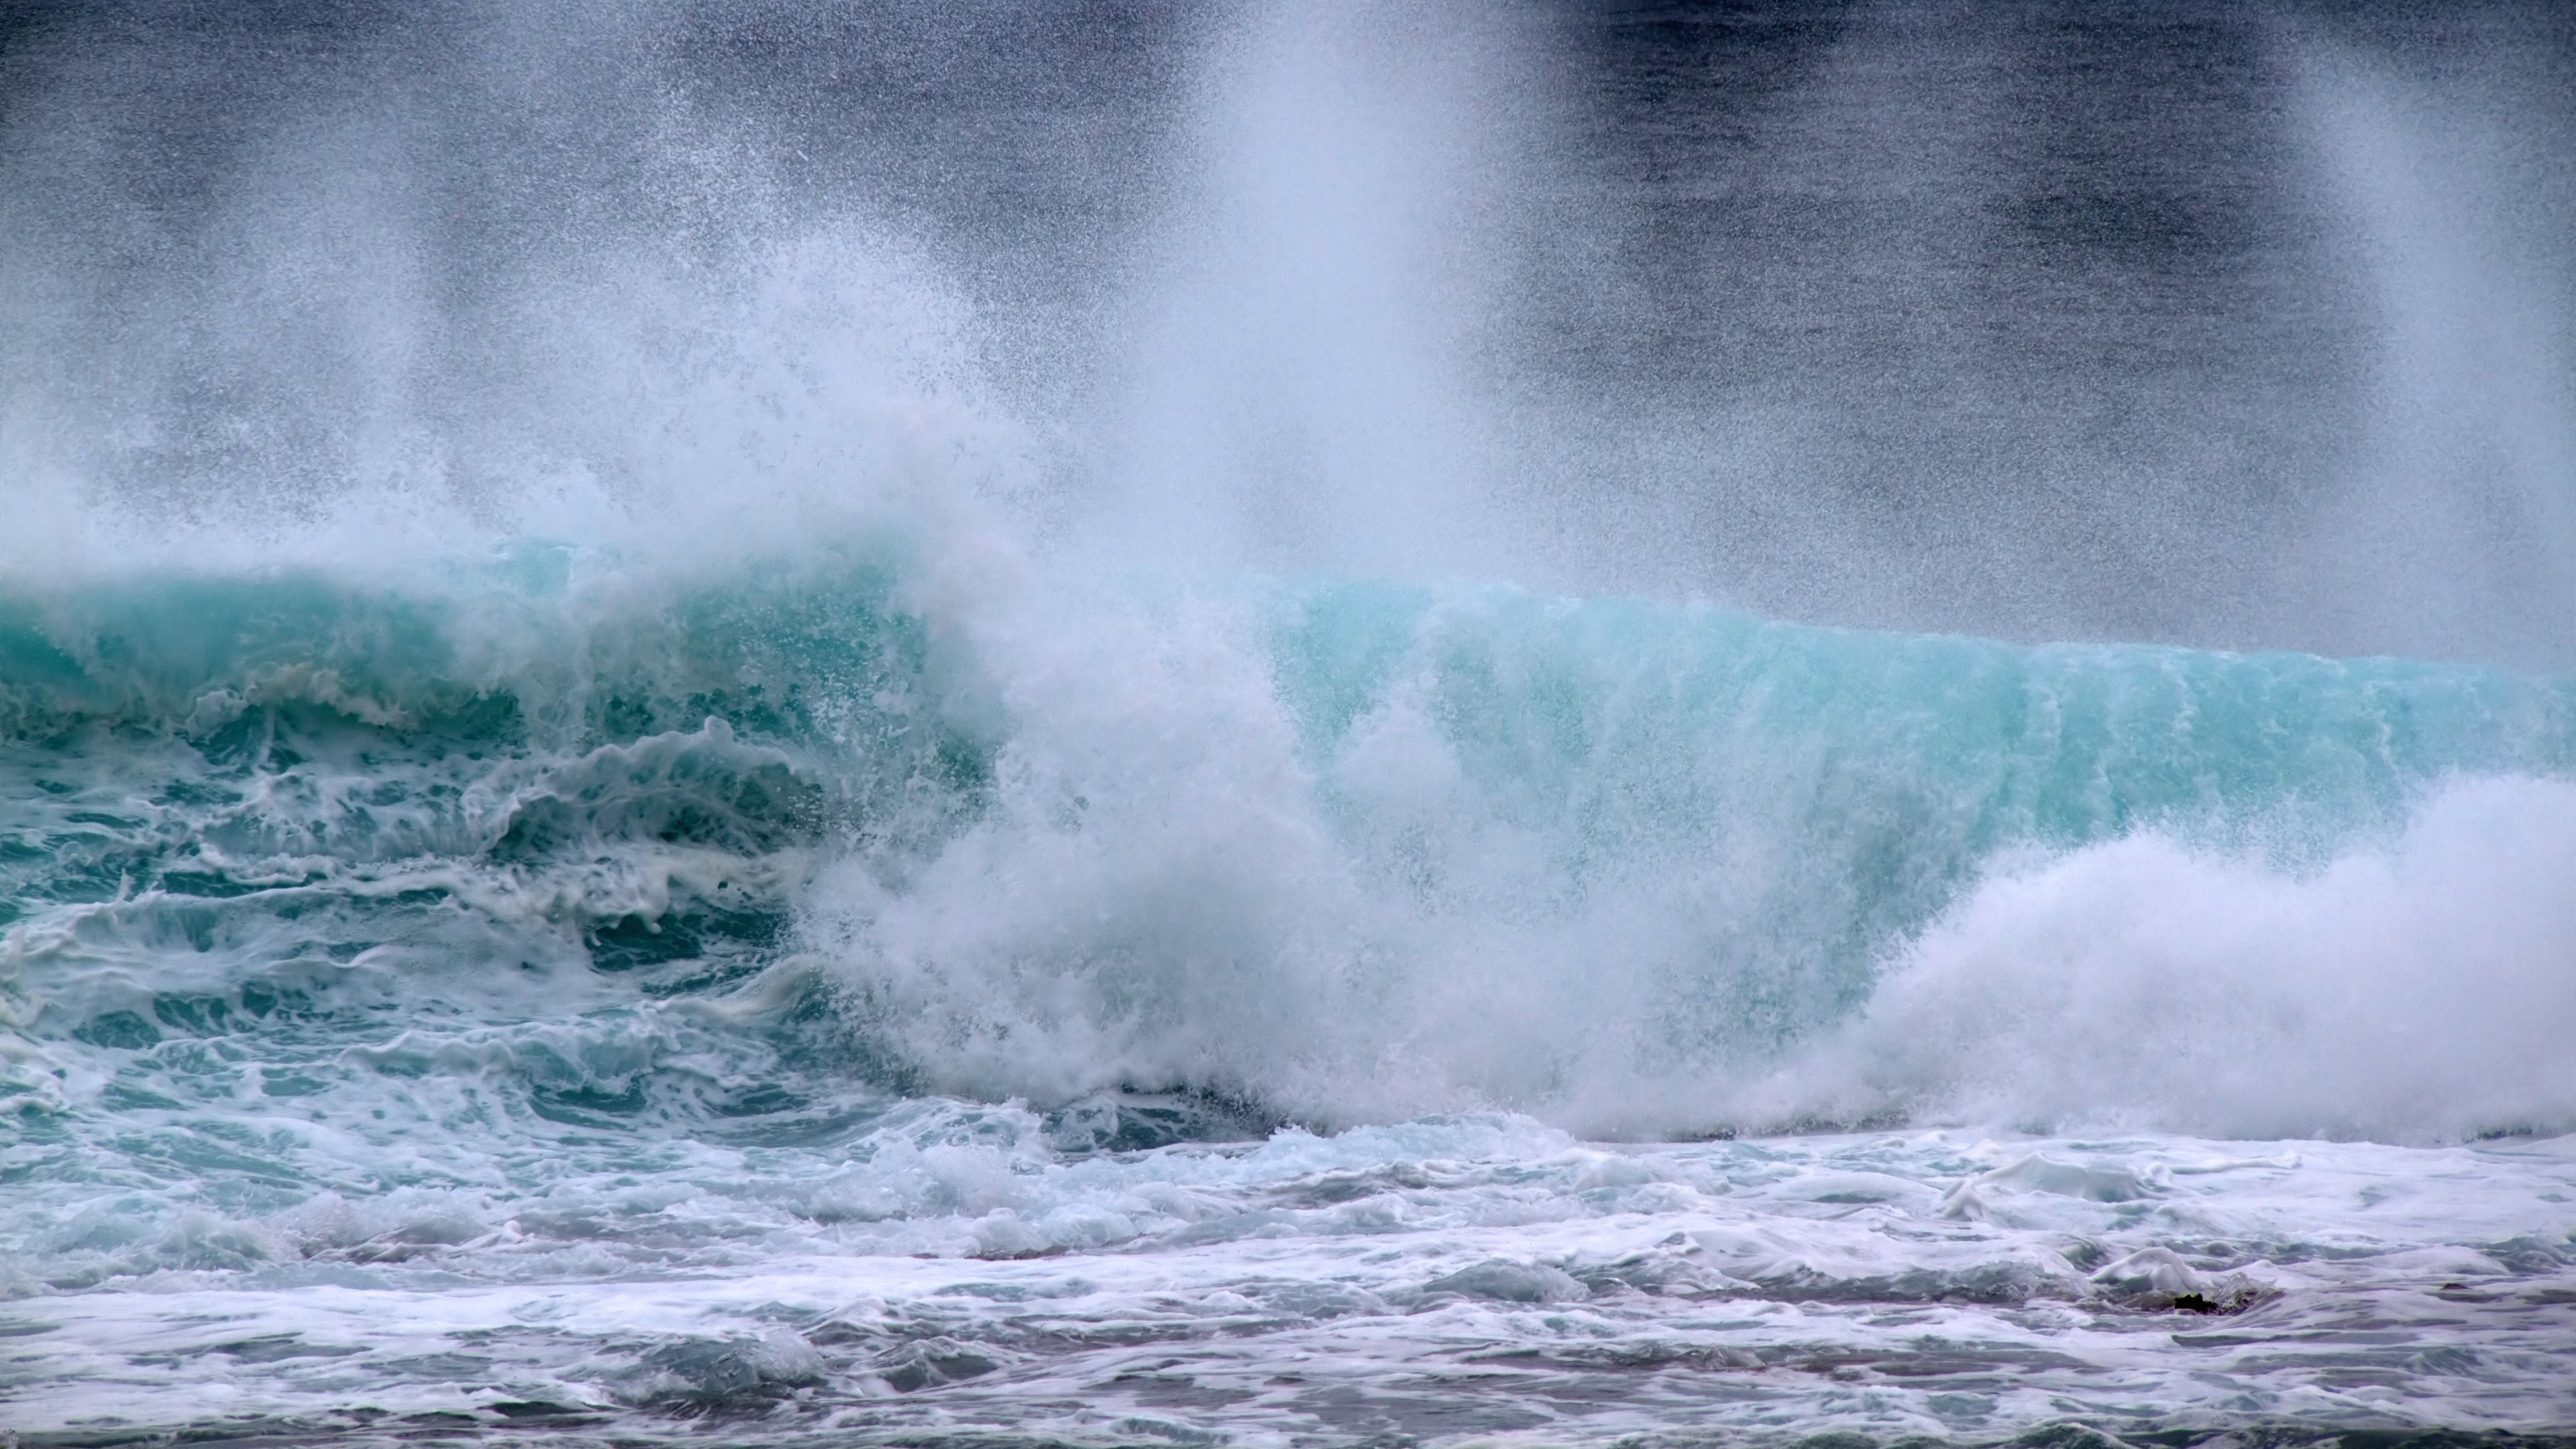 3840x2160 4K HD Wallpaper: Ocean Waves - Madliena, Malta Majjistral, MT